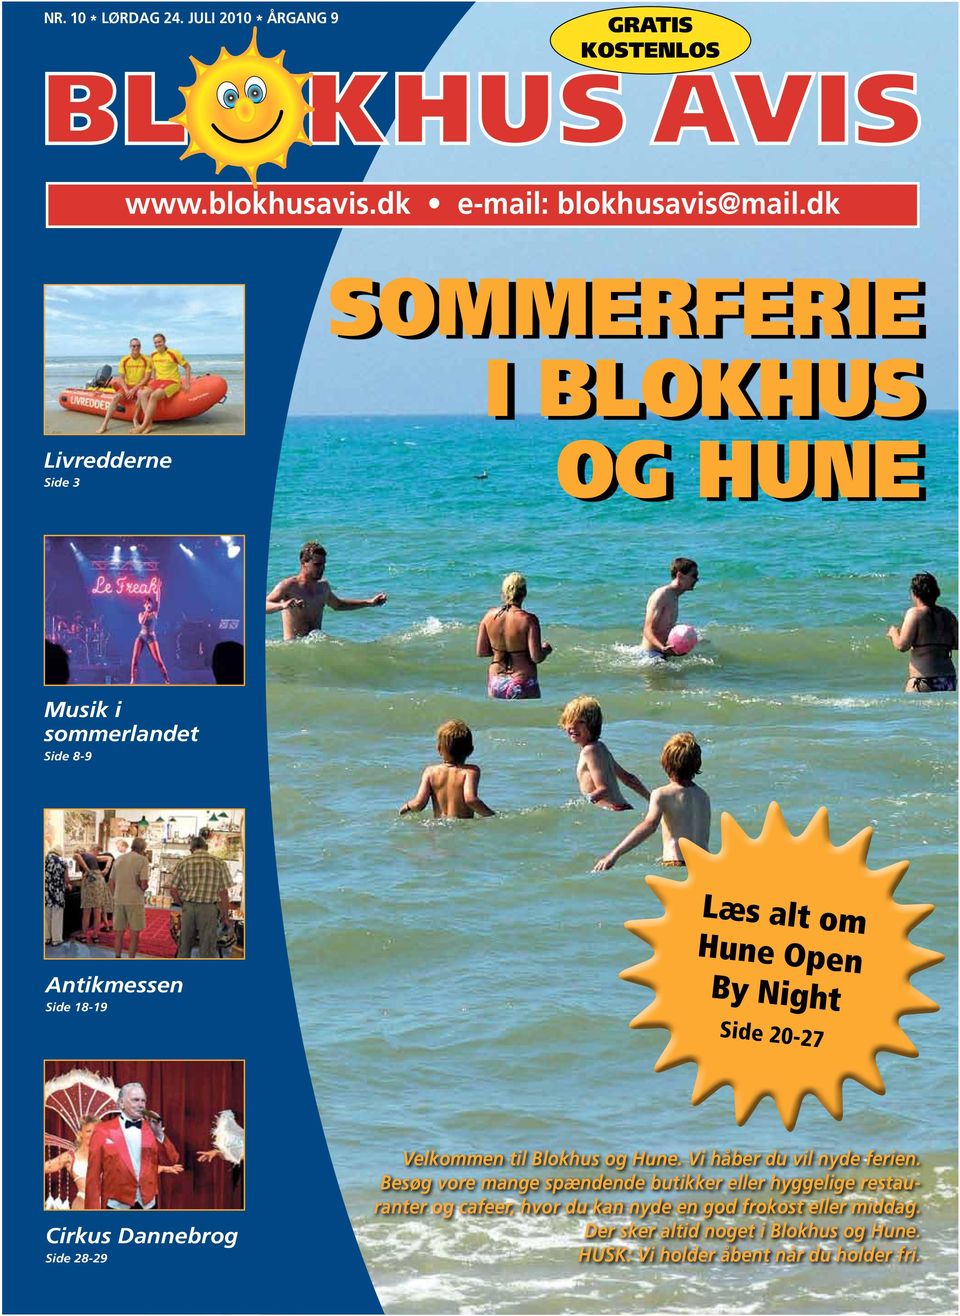 Side 20-27 Cirkus Dannebrog Side 28-29 Velkommen til Blokhus og Hune. Vi håber du vil nyde ferien.